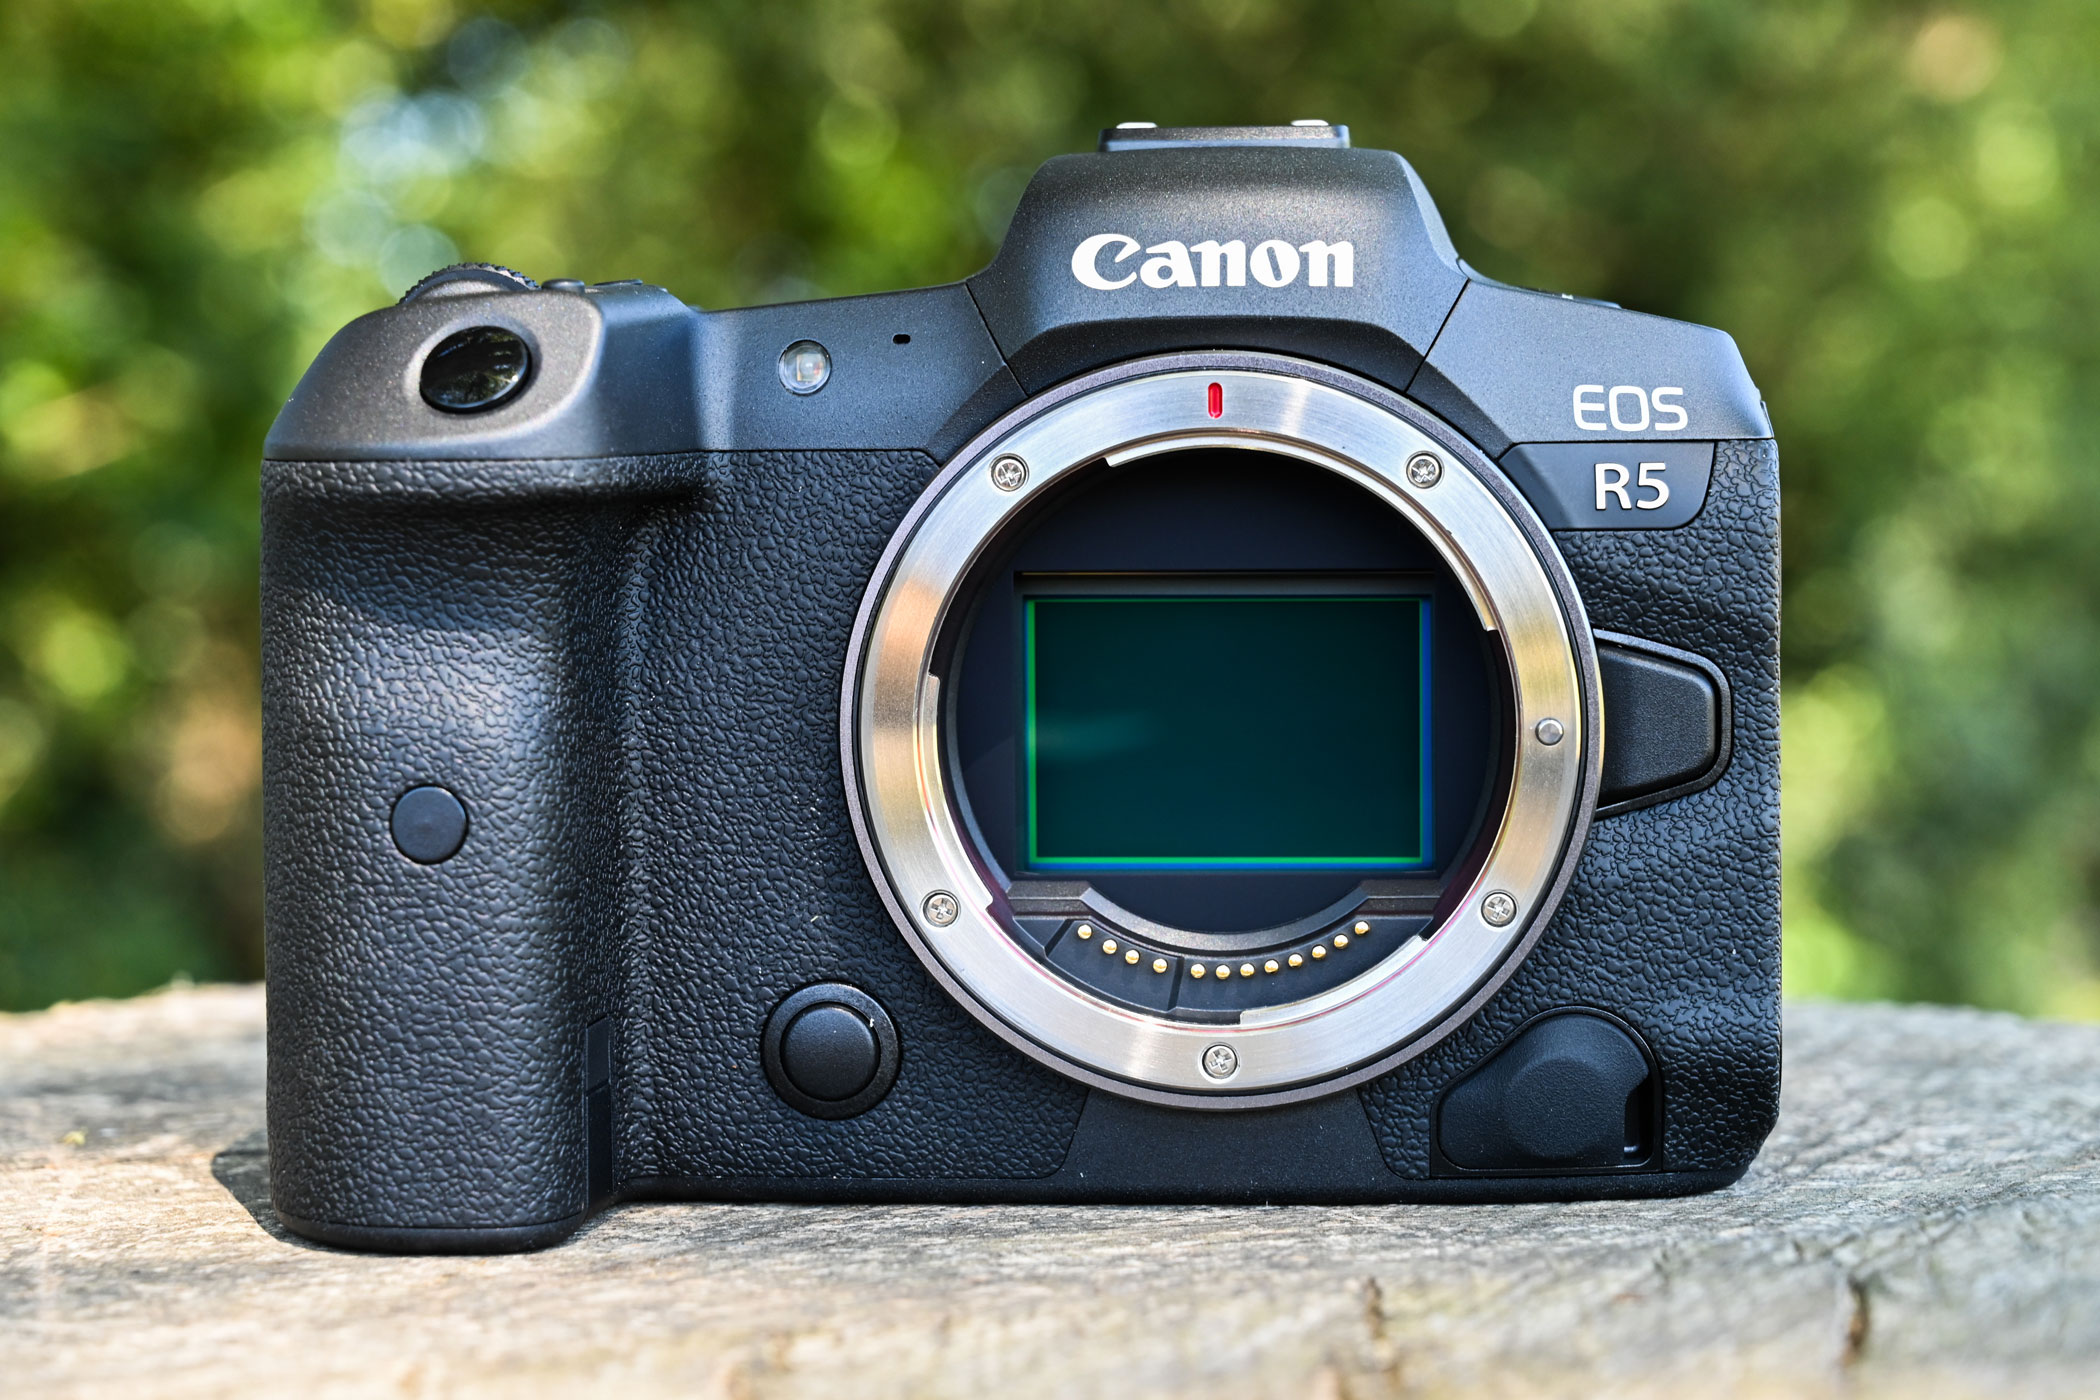 Canon has based the EOS R5 around an all-new 45MP full-frame sensor